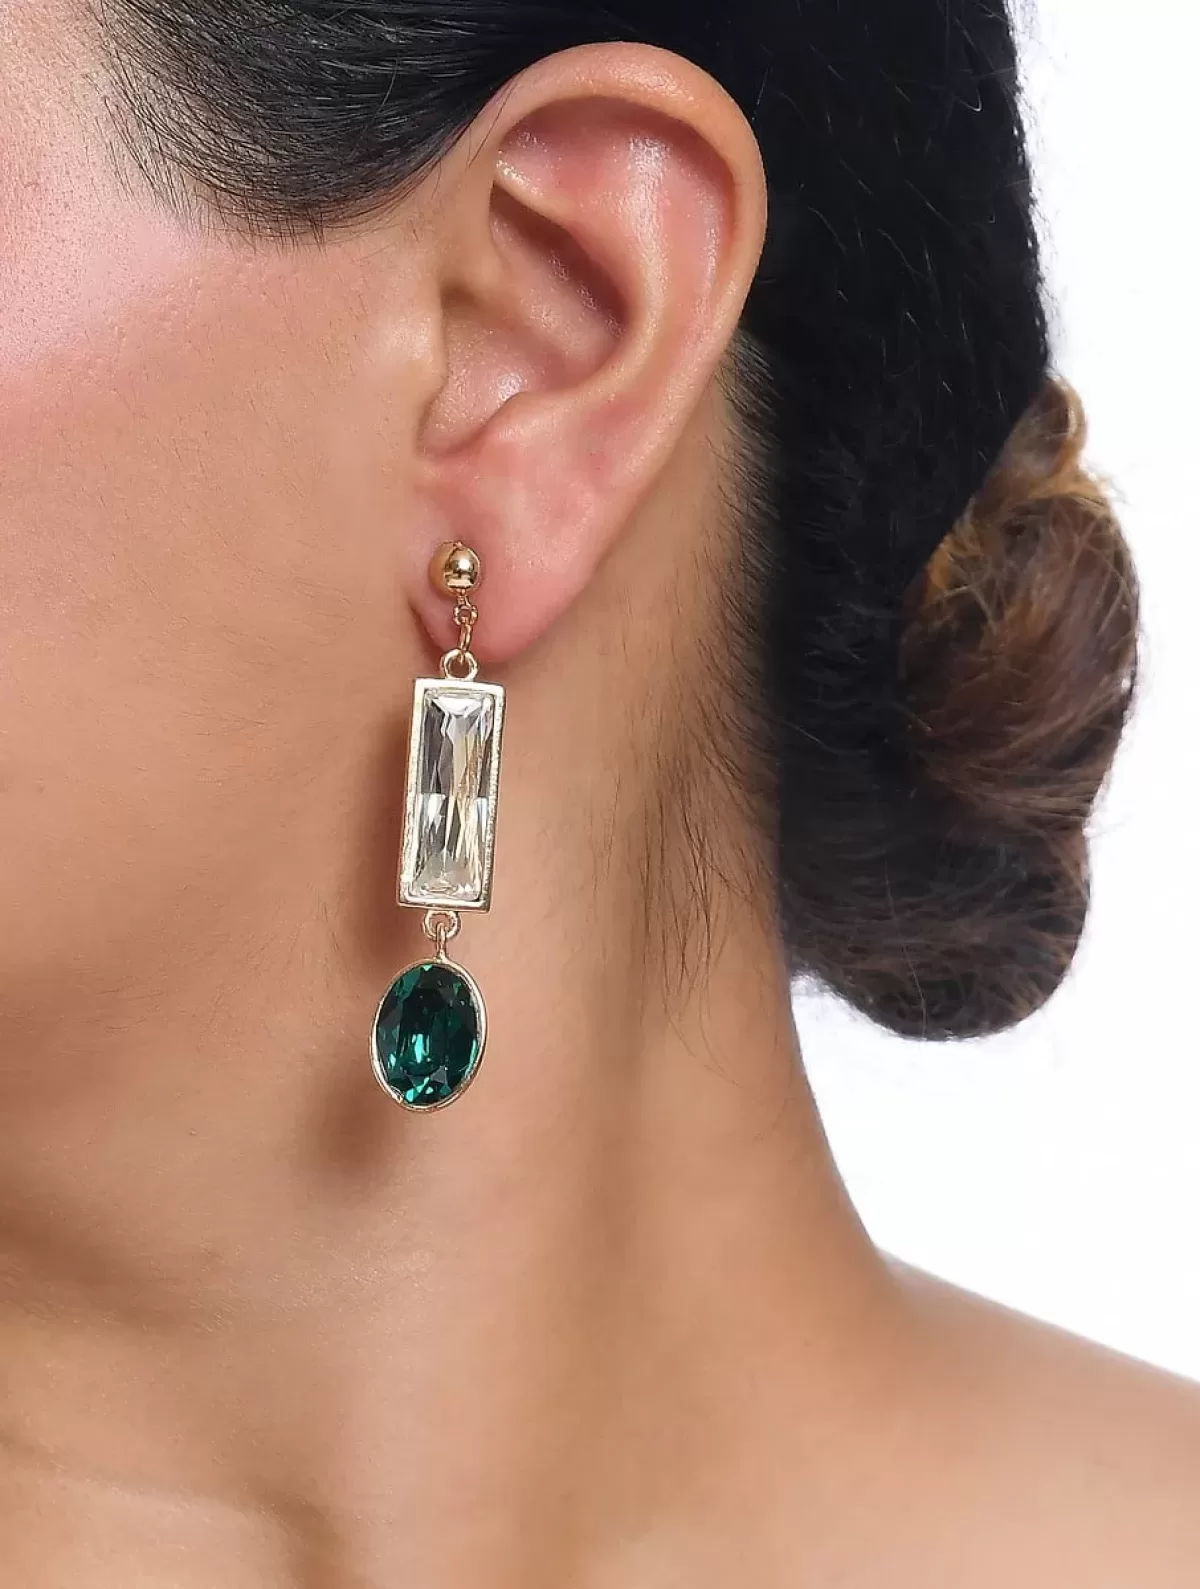 Aggregate more than 138 swarovski earrings online india super hot